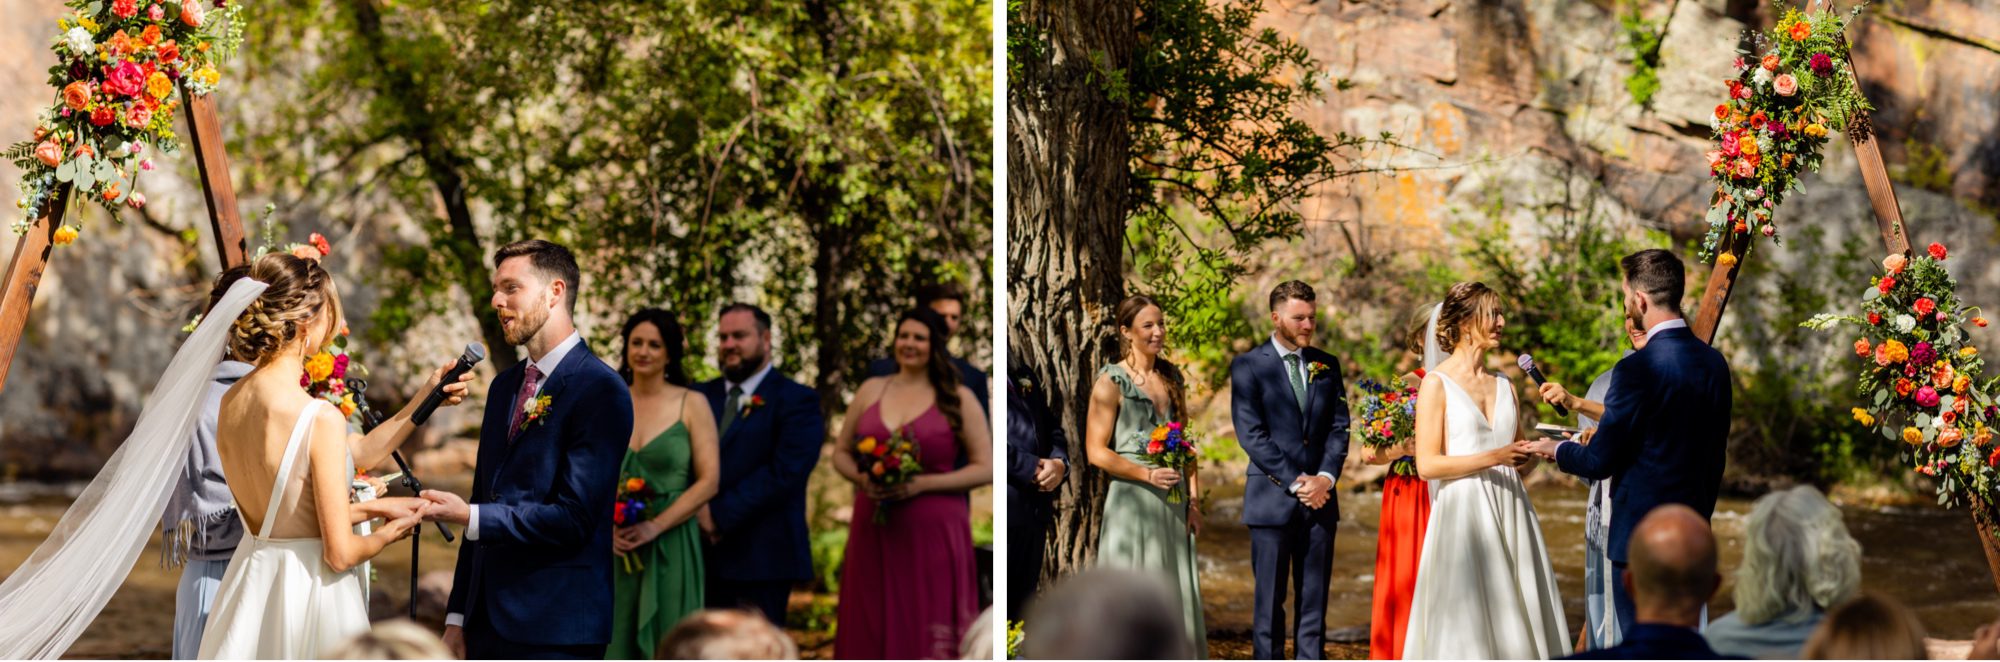 Planet Bluegrass Wedding venue in Lyons Colorado: Colorado Wedding Photographer, Wedding ceremony, Triangle wedding arch, Triangle wedding altar